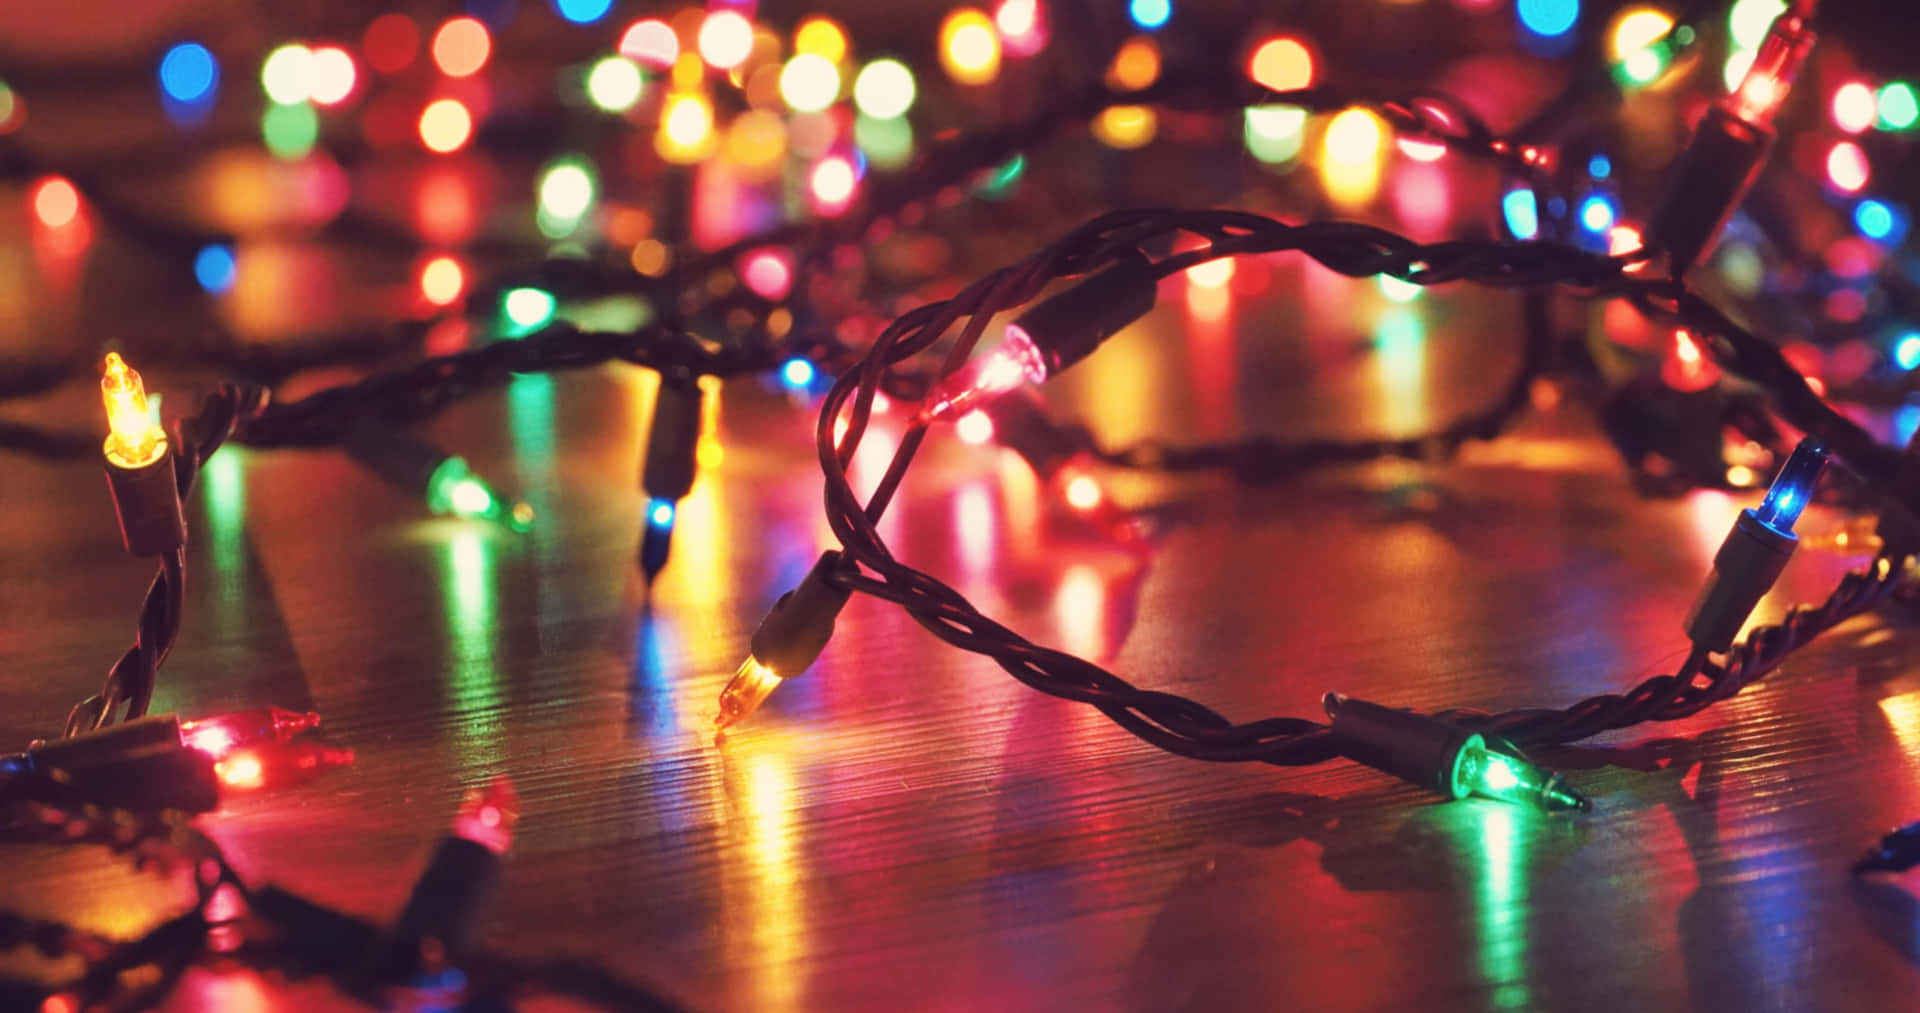 A festive Christmas celebration, complete with lights.